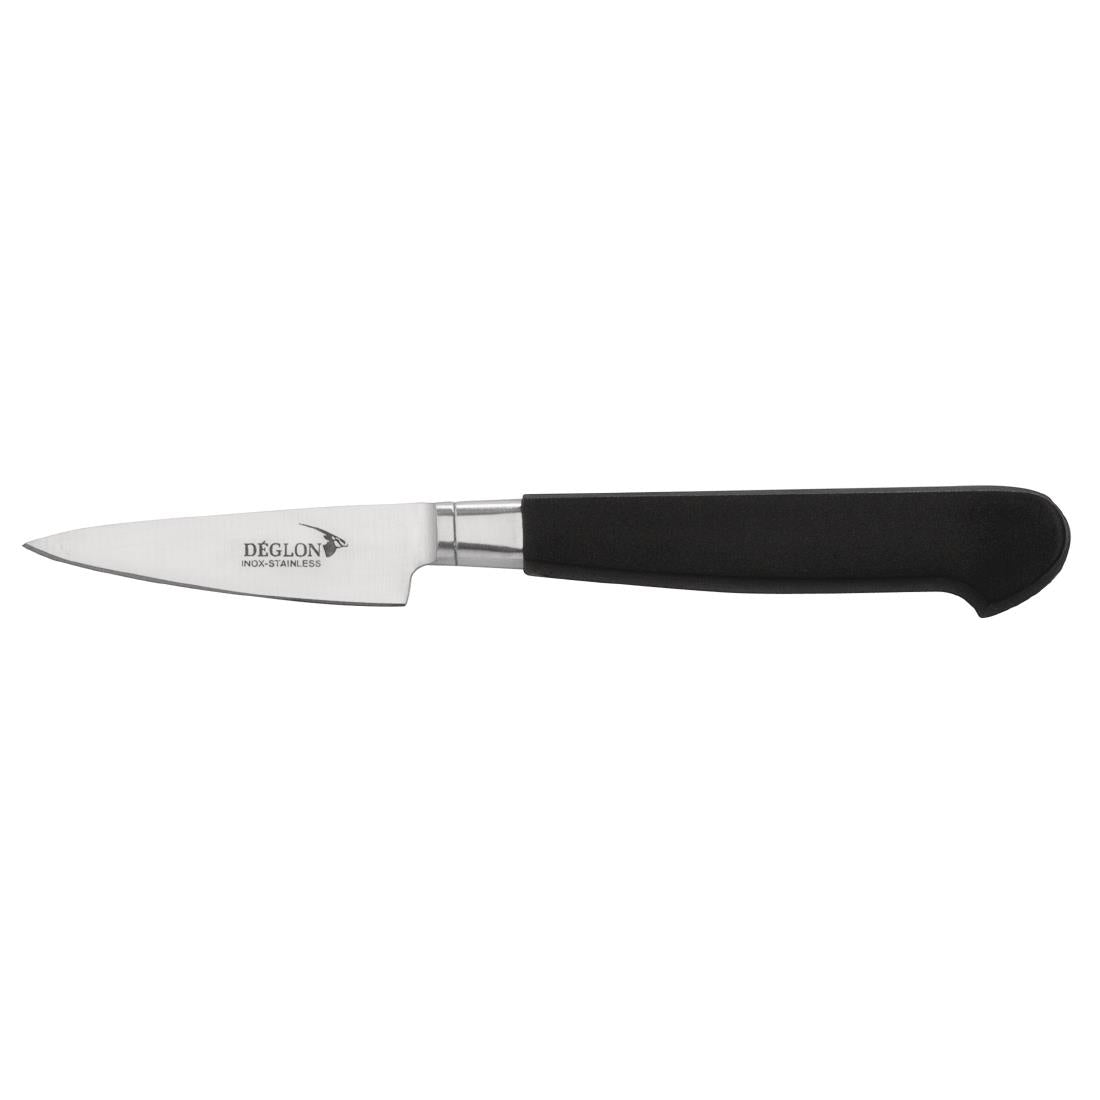 GG071 Deglon Sabatier Paring Knife 7.5cm JD Catering Equipment Solutions Ltd